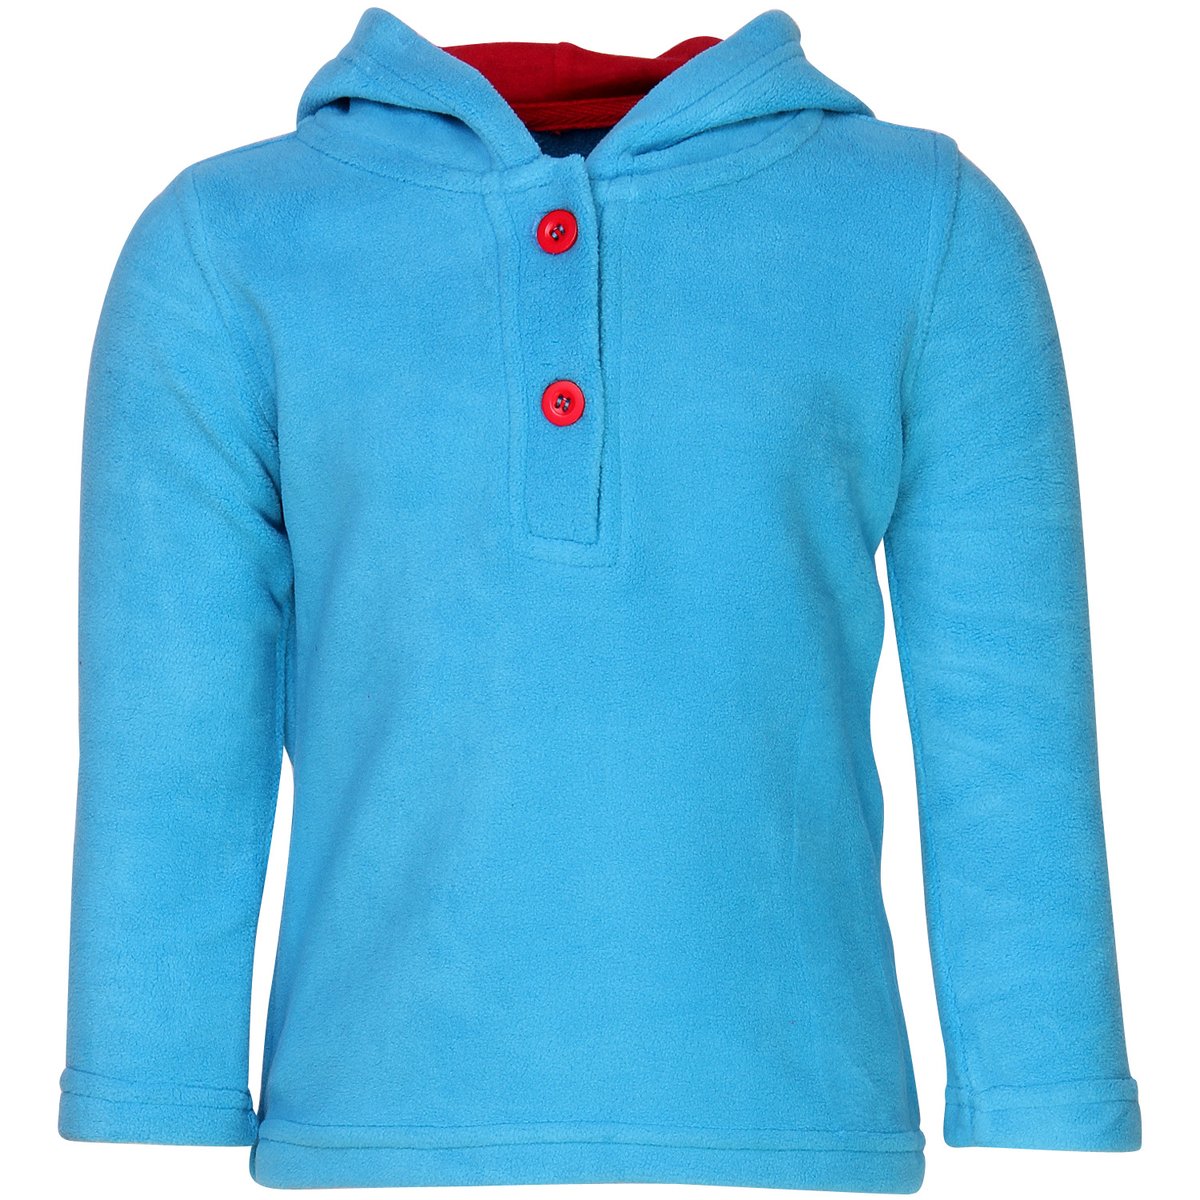 Turquoise Color Winter Hoodie Sweatshirt For Unisex Baby